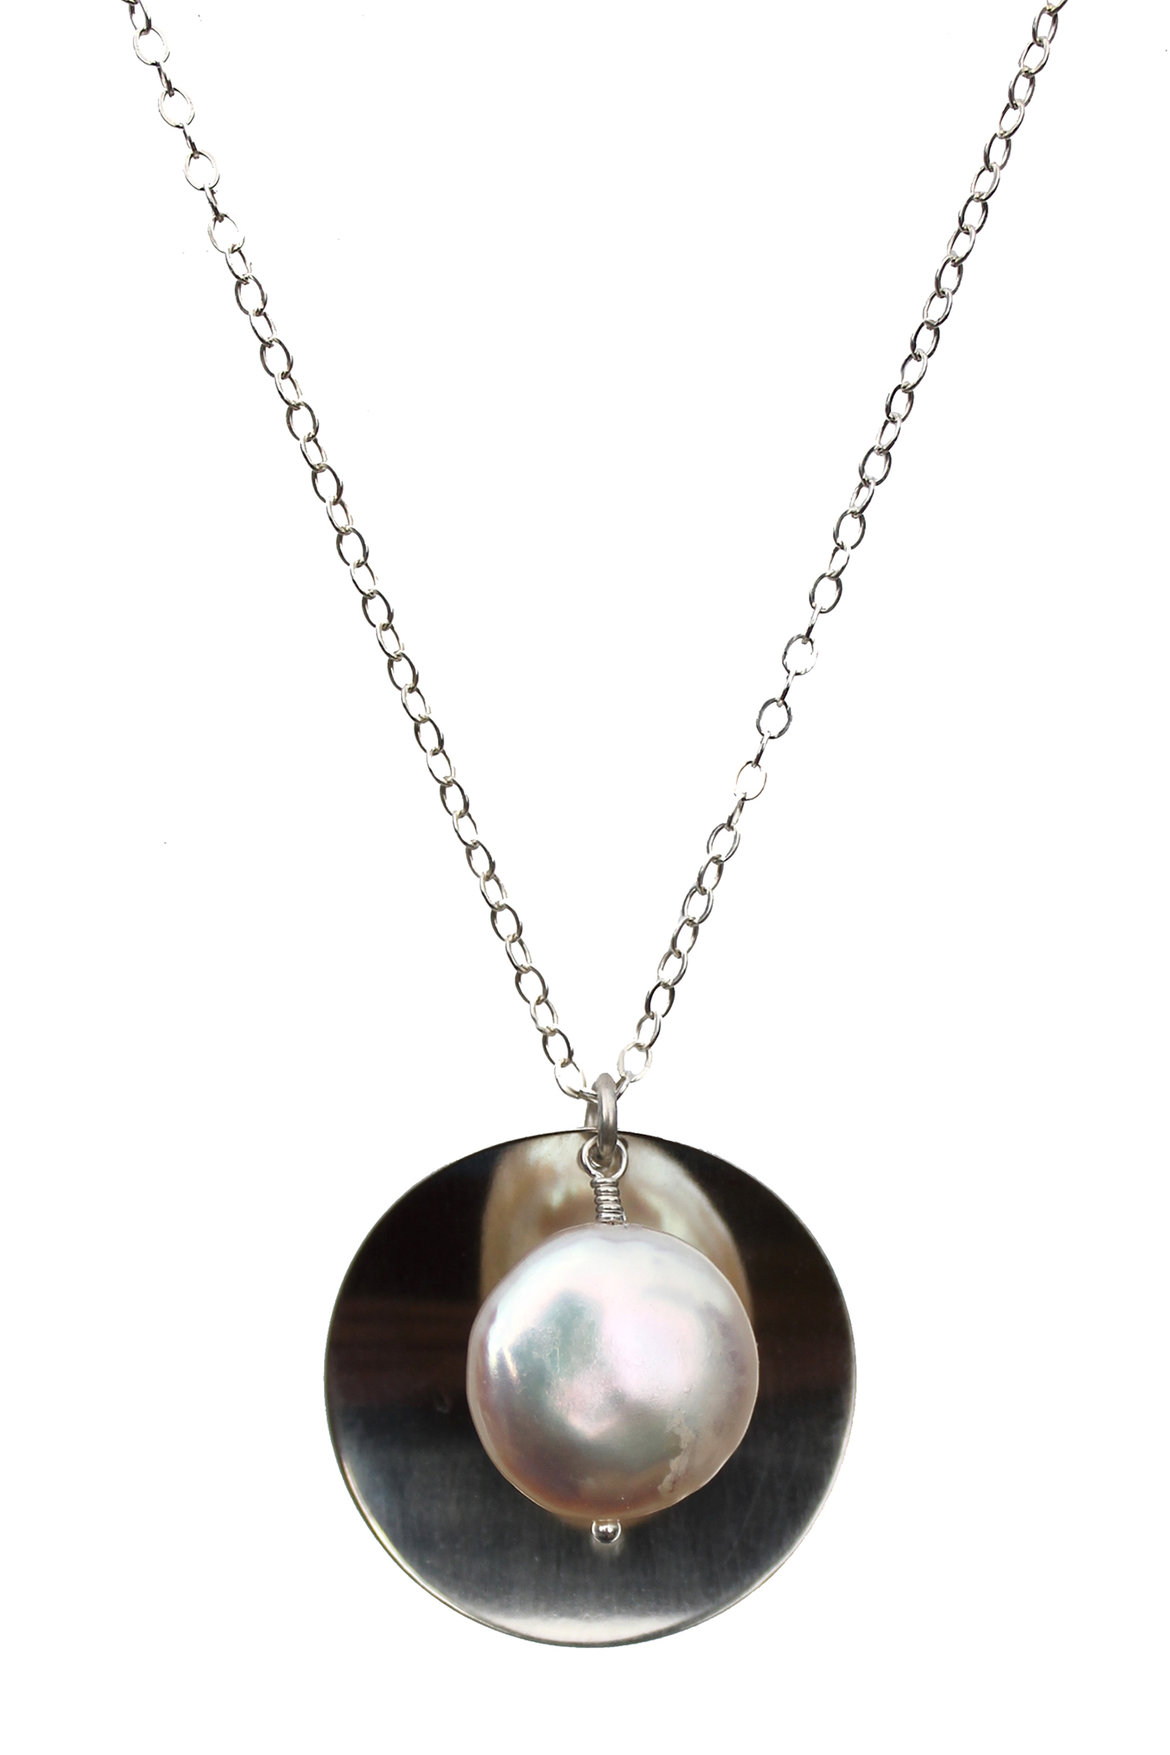 ten2midnightstudios silver pendant pearl necklace